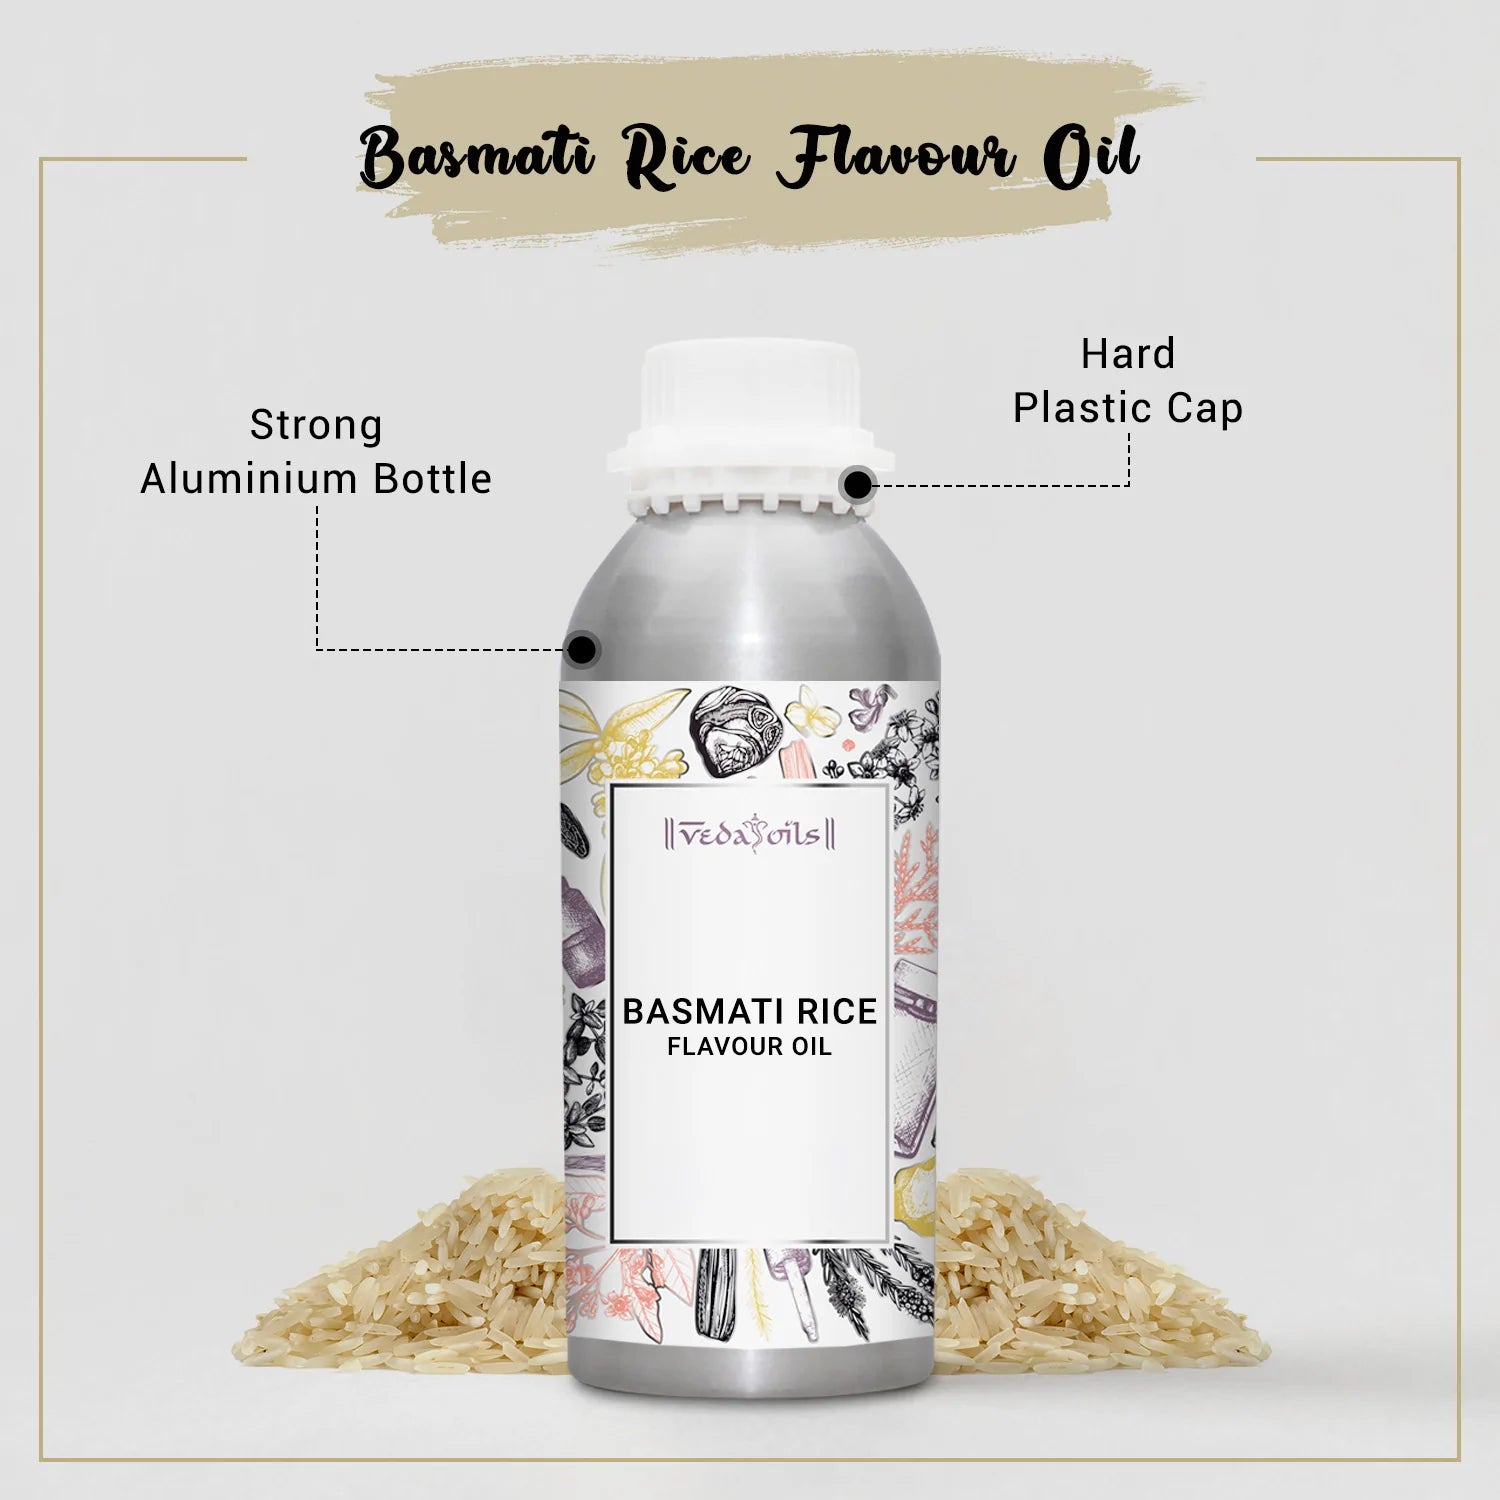 Basmati Rice Flavor Oil